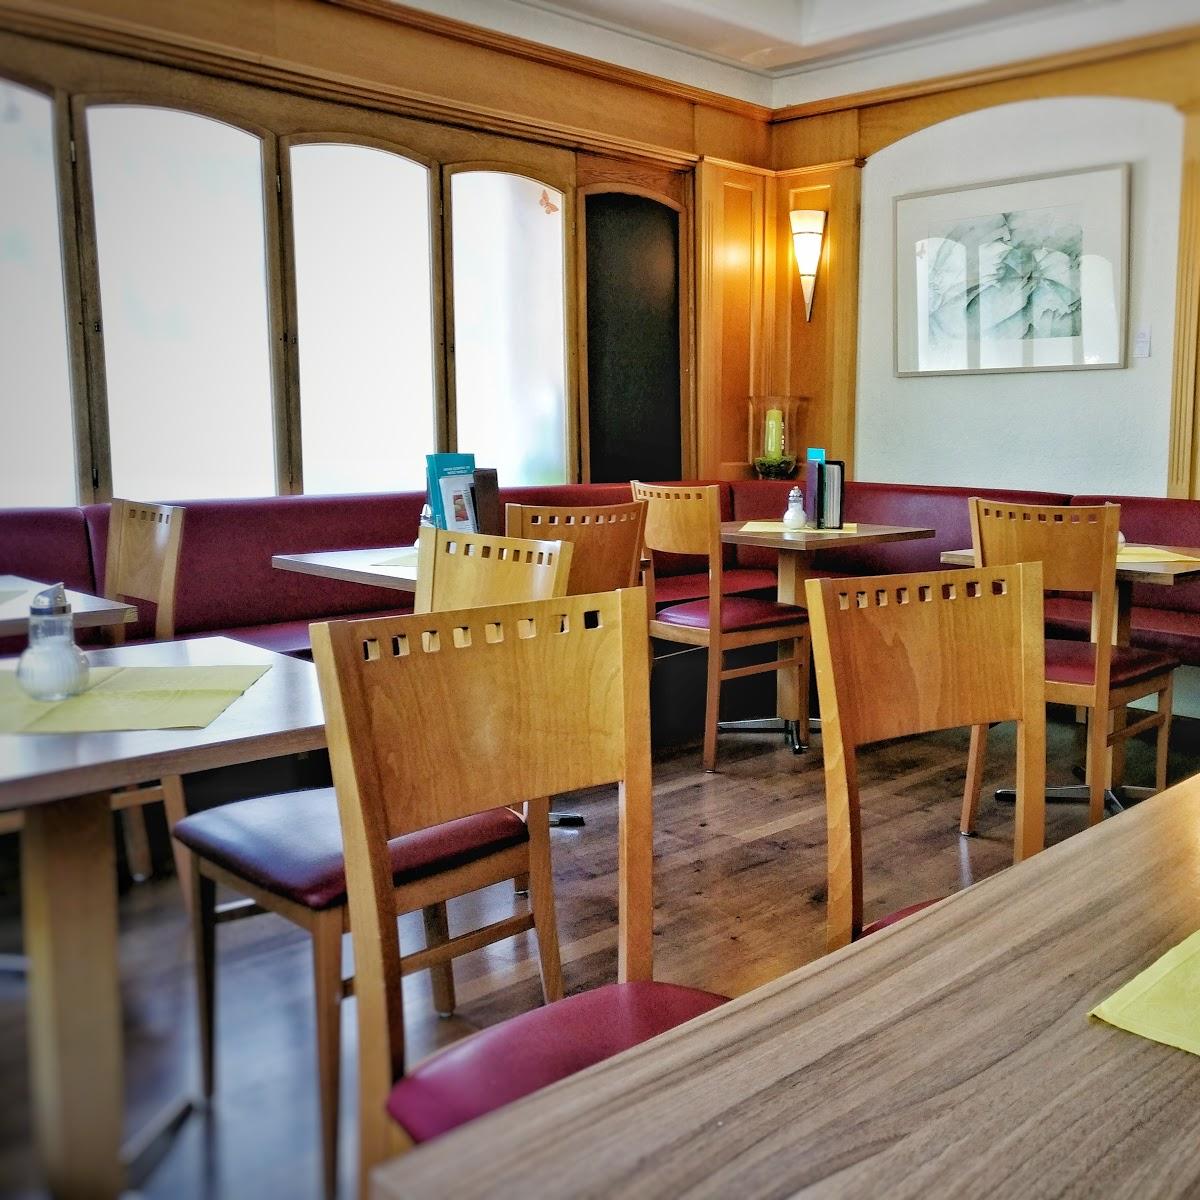 Restaurant "Café Sixt" in Dießen am Ammersee